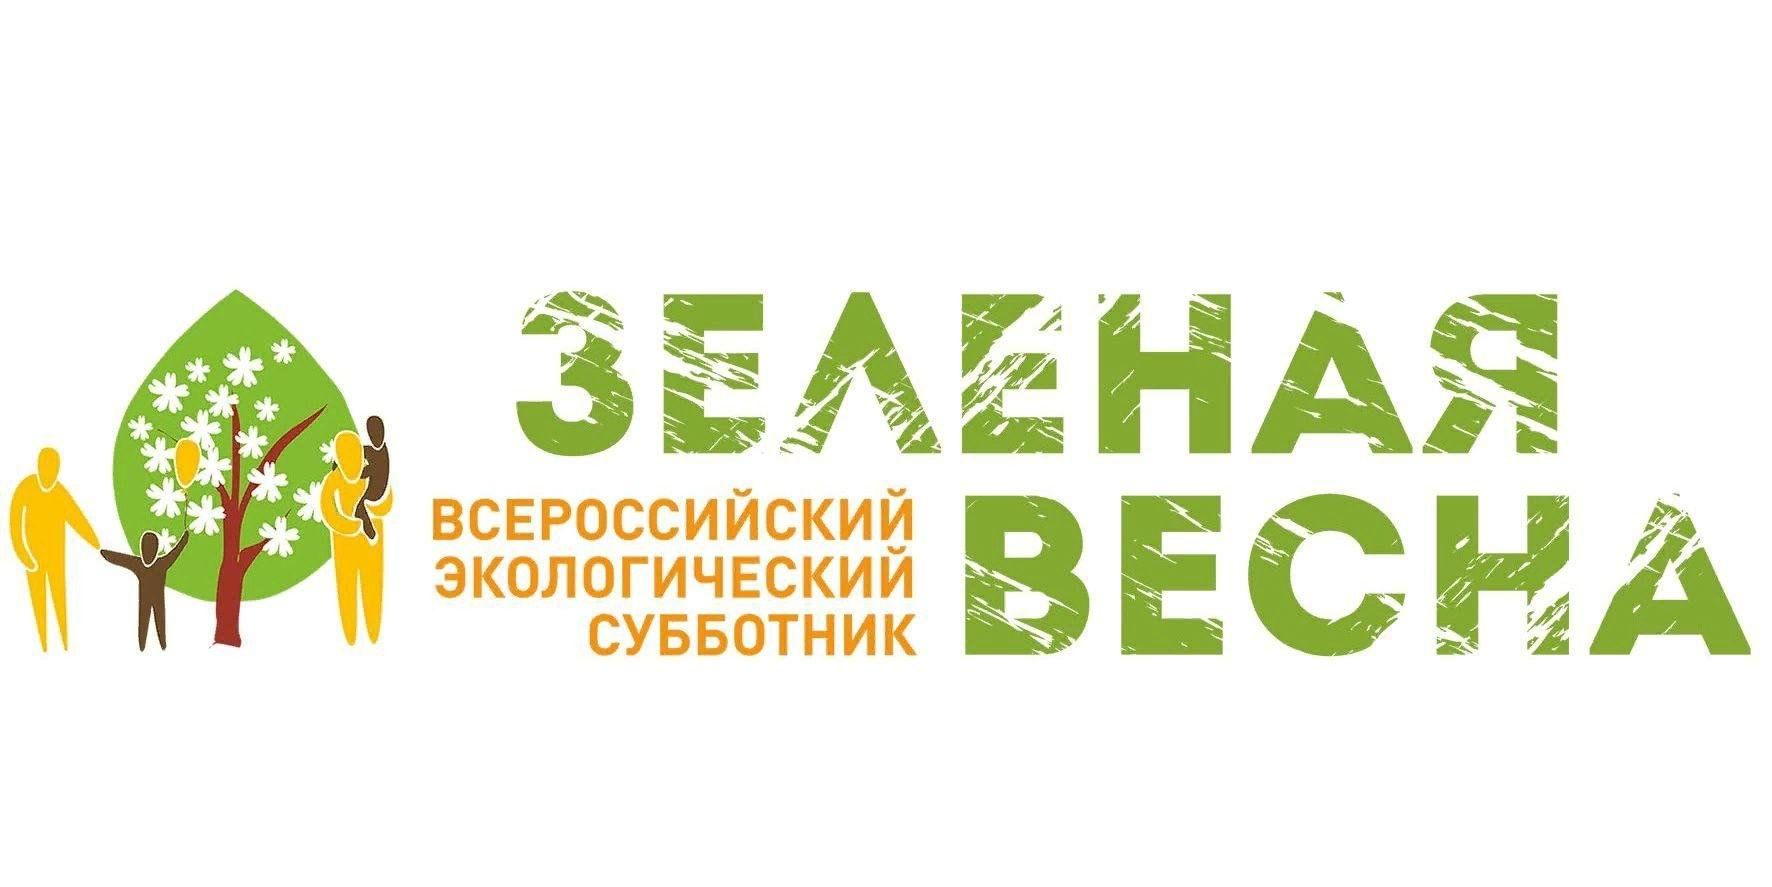 Зеленая Весна 2021 субботник логотип